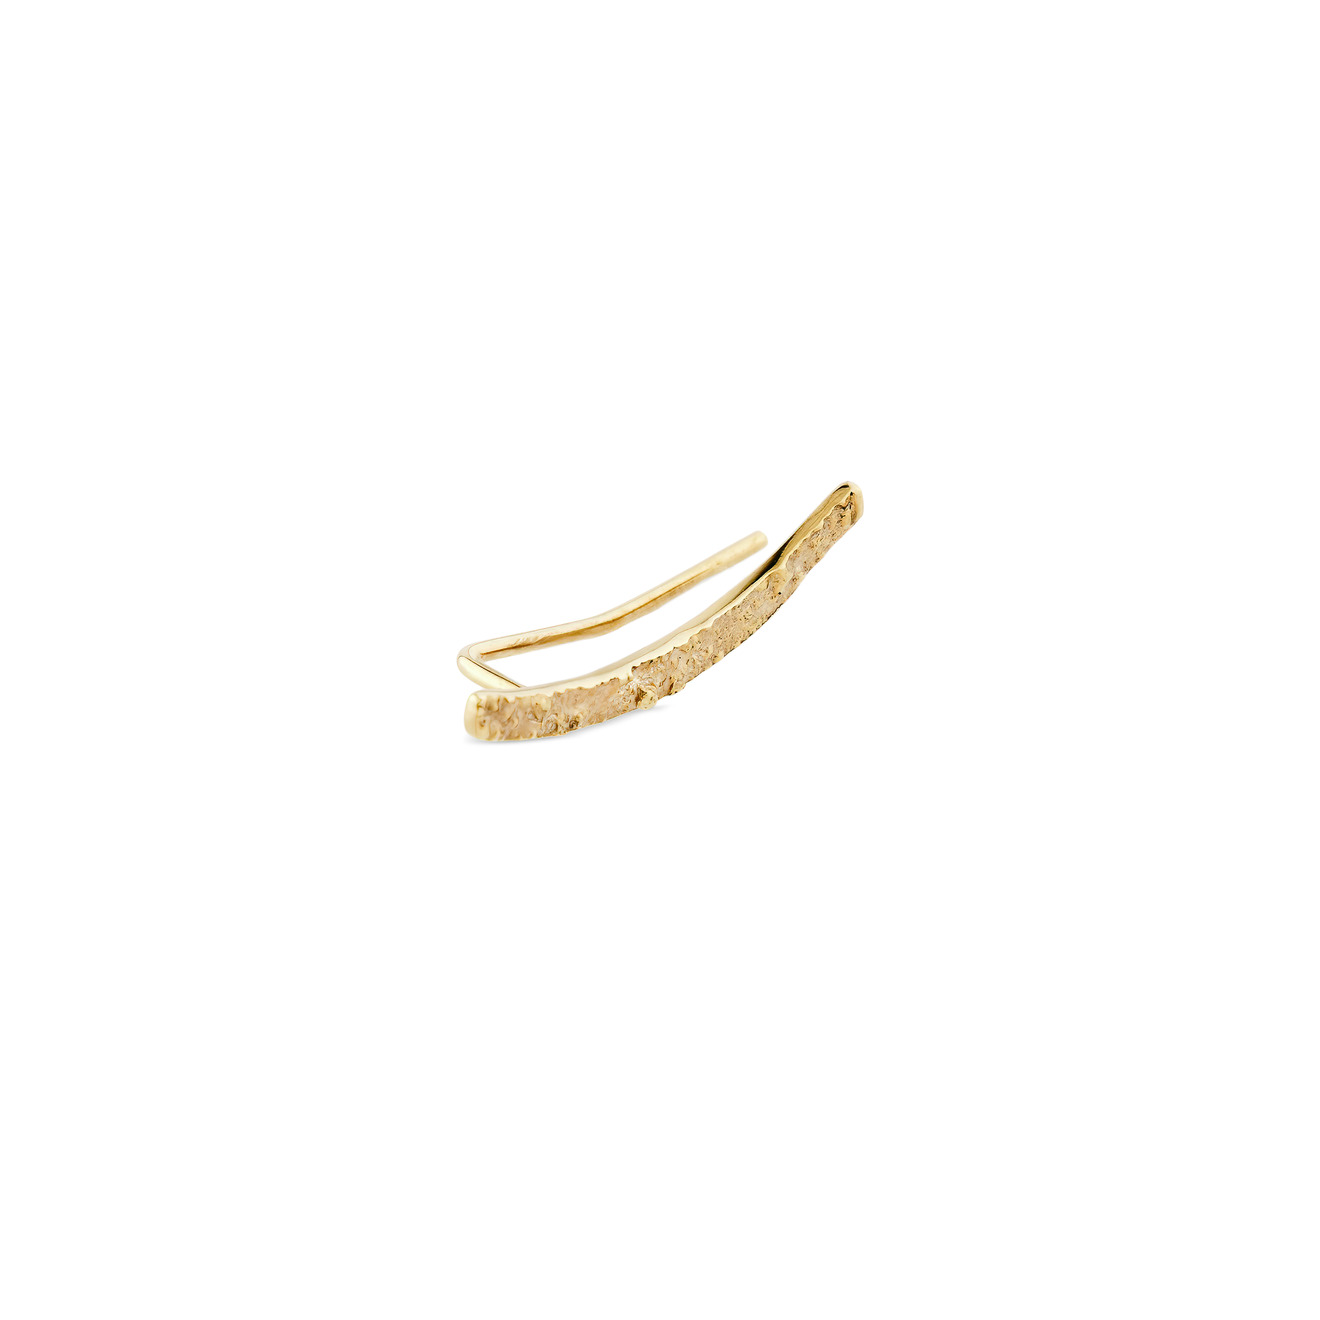 УРА jewelry Позолоченный клаймбер из серебра на левое ухо ms marble позолоченный клаймбер змея из серебра movement на правое ухо